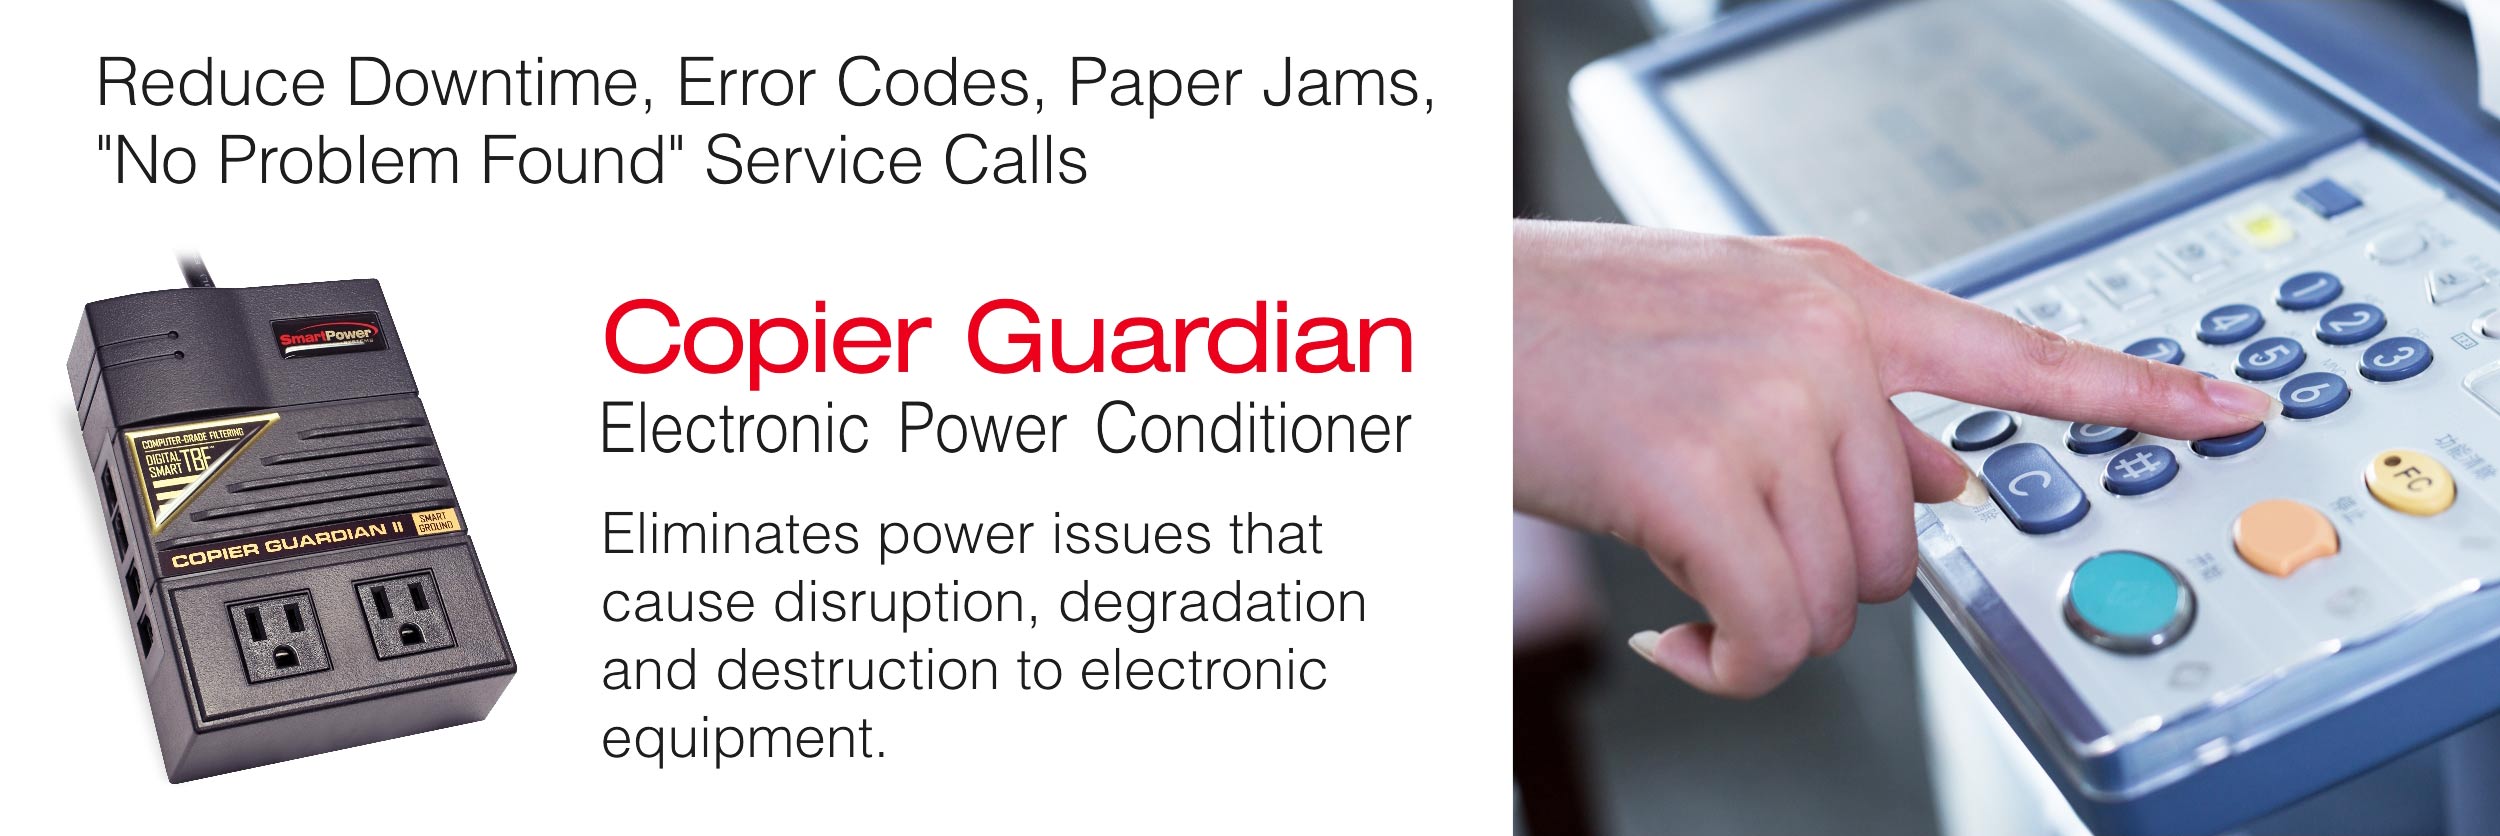 Copier Guardian II Electronic Power Conditioner